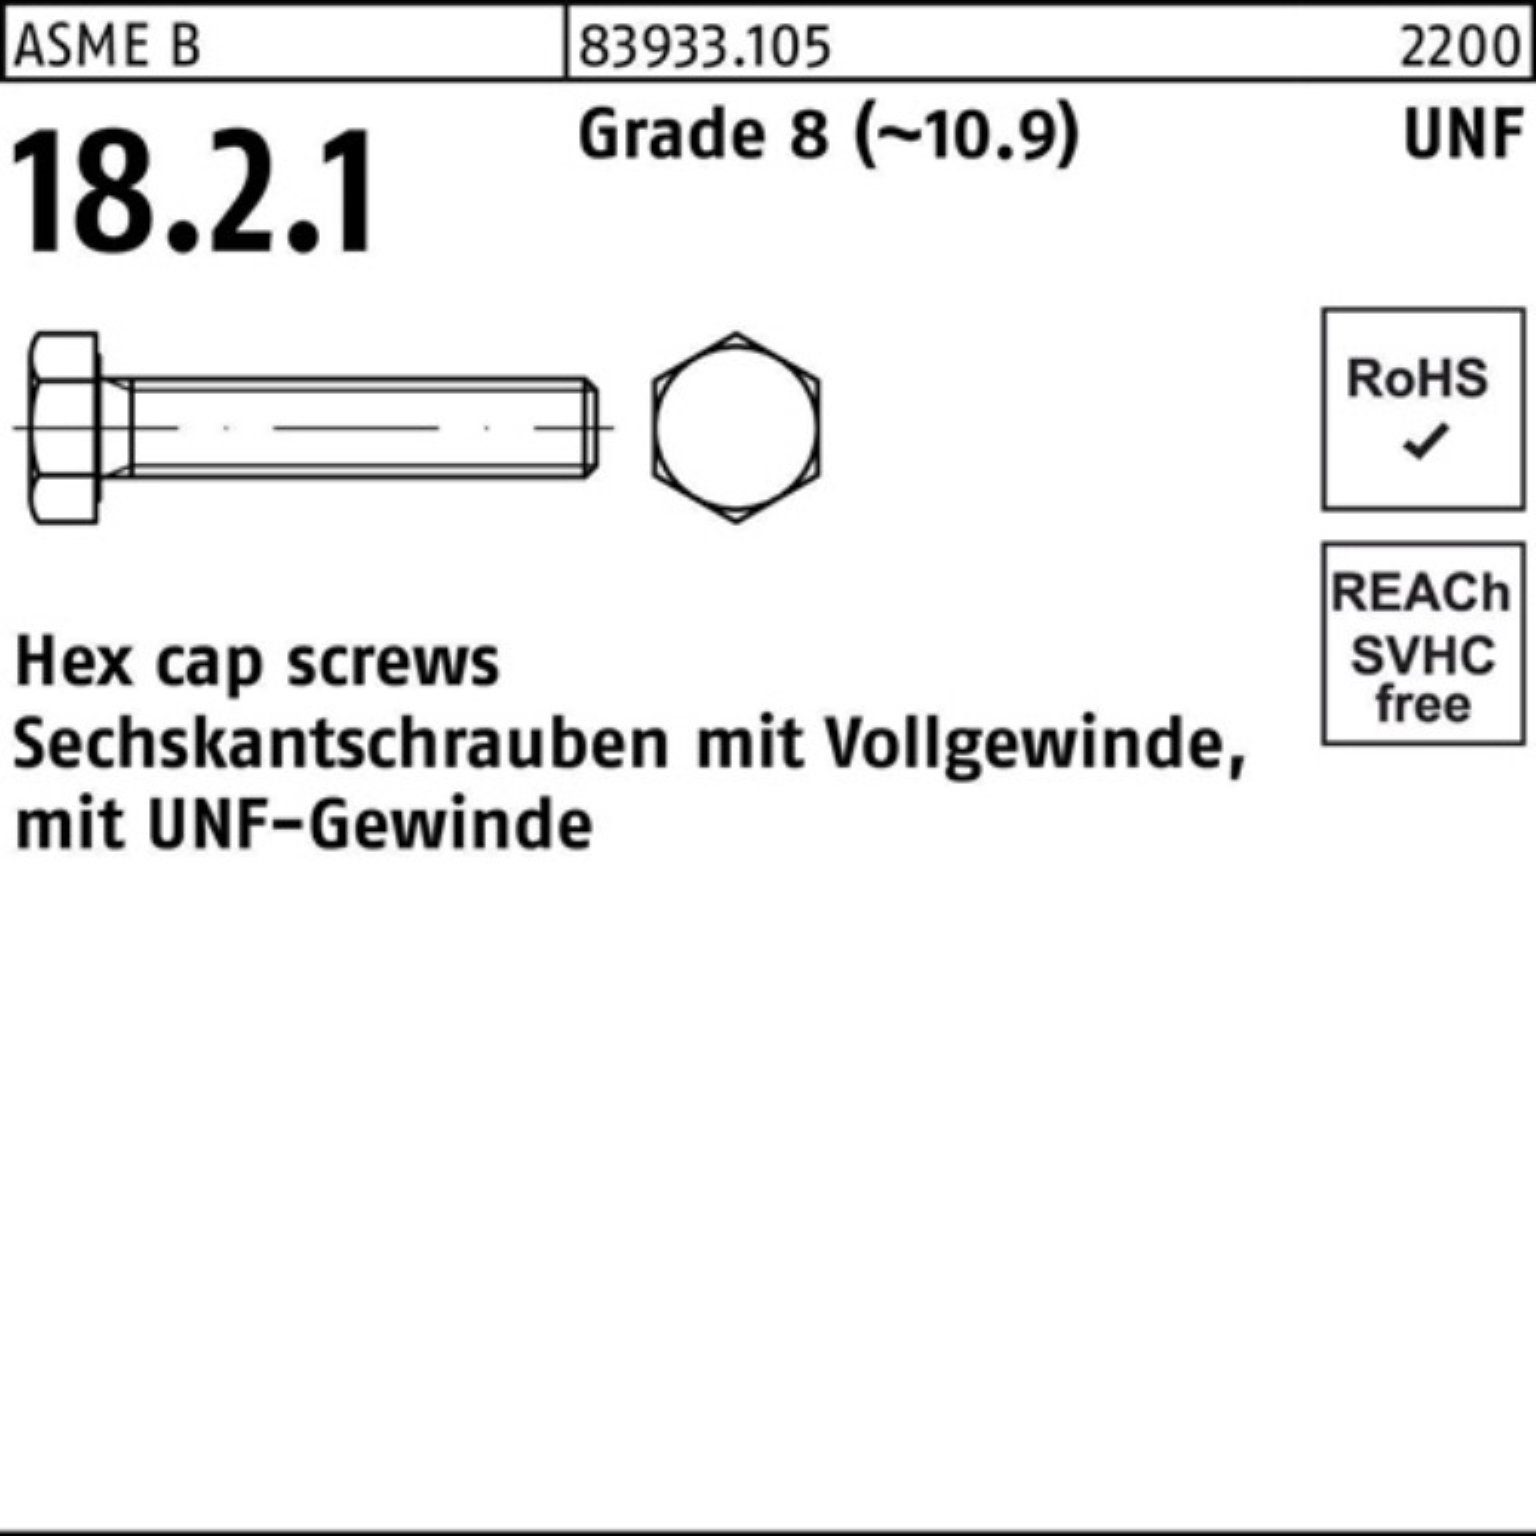 Reyher Sechskantschraube 100er Pack Sechskantschraube R 83933 UNF-Gewinde VG 1/2x 1 1/2 Grade 8